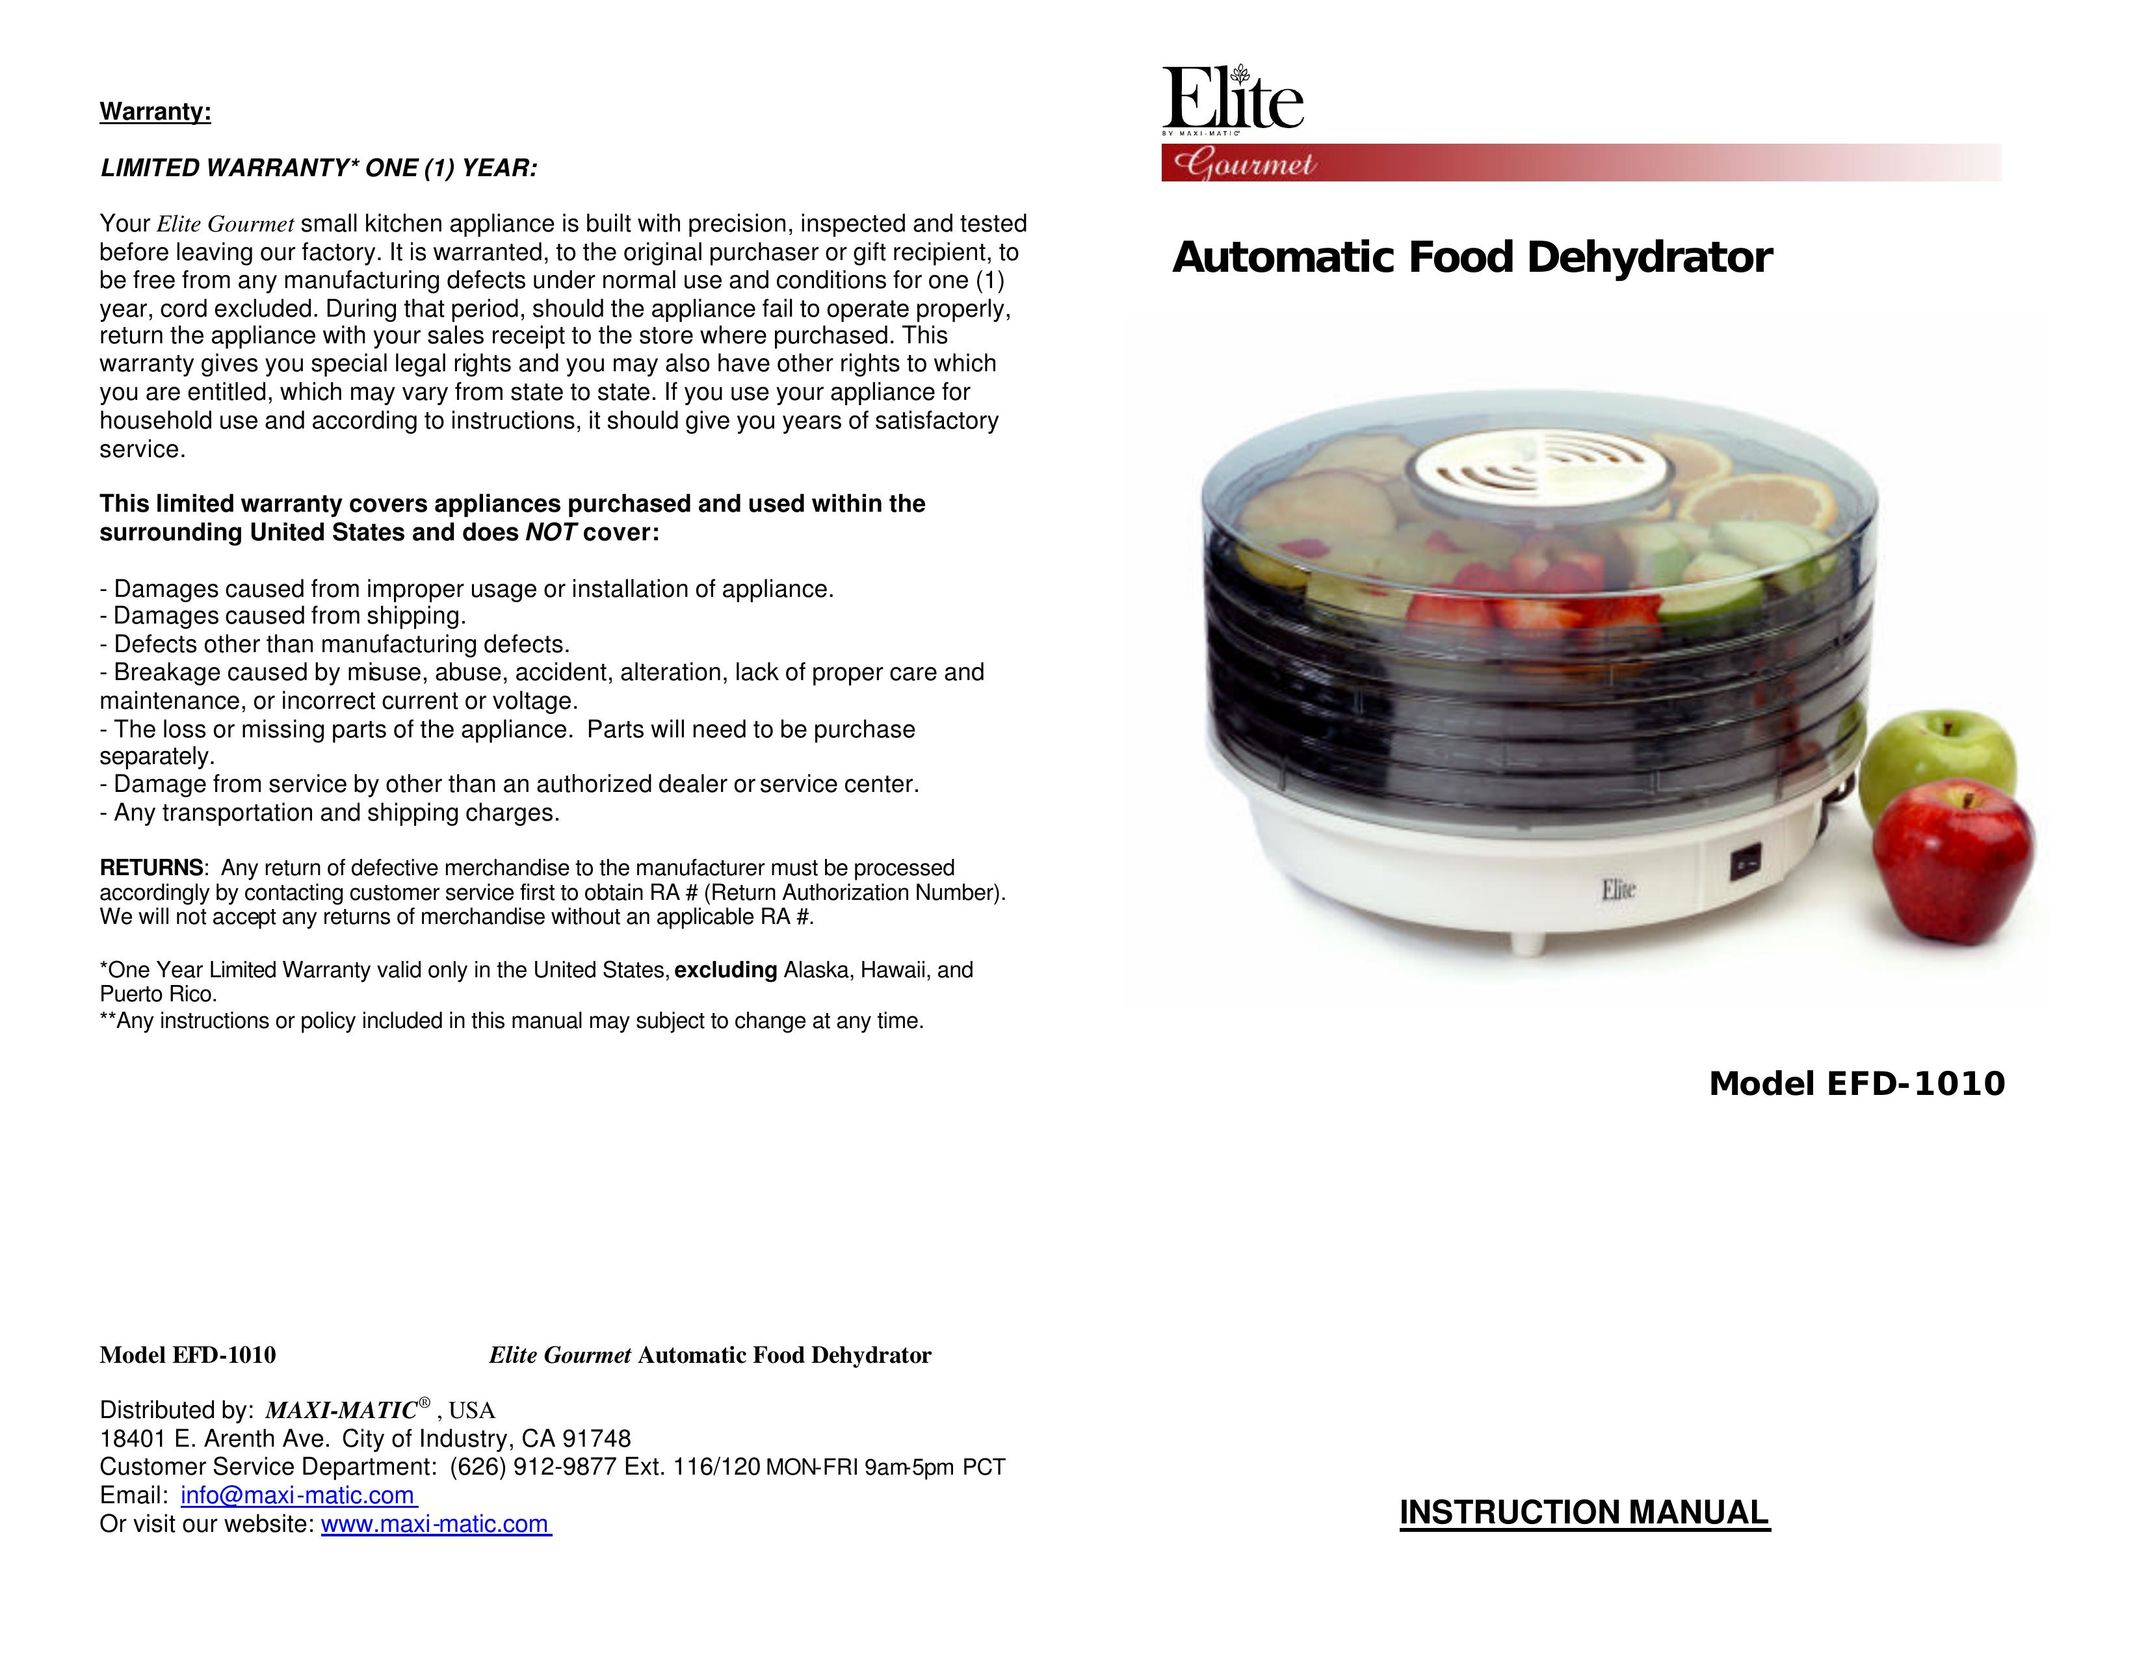 Maximatic EFD-1010 Food Saver User Manual